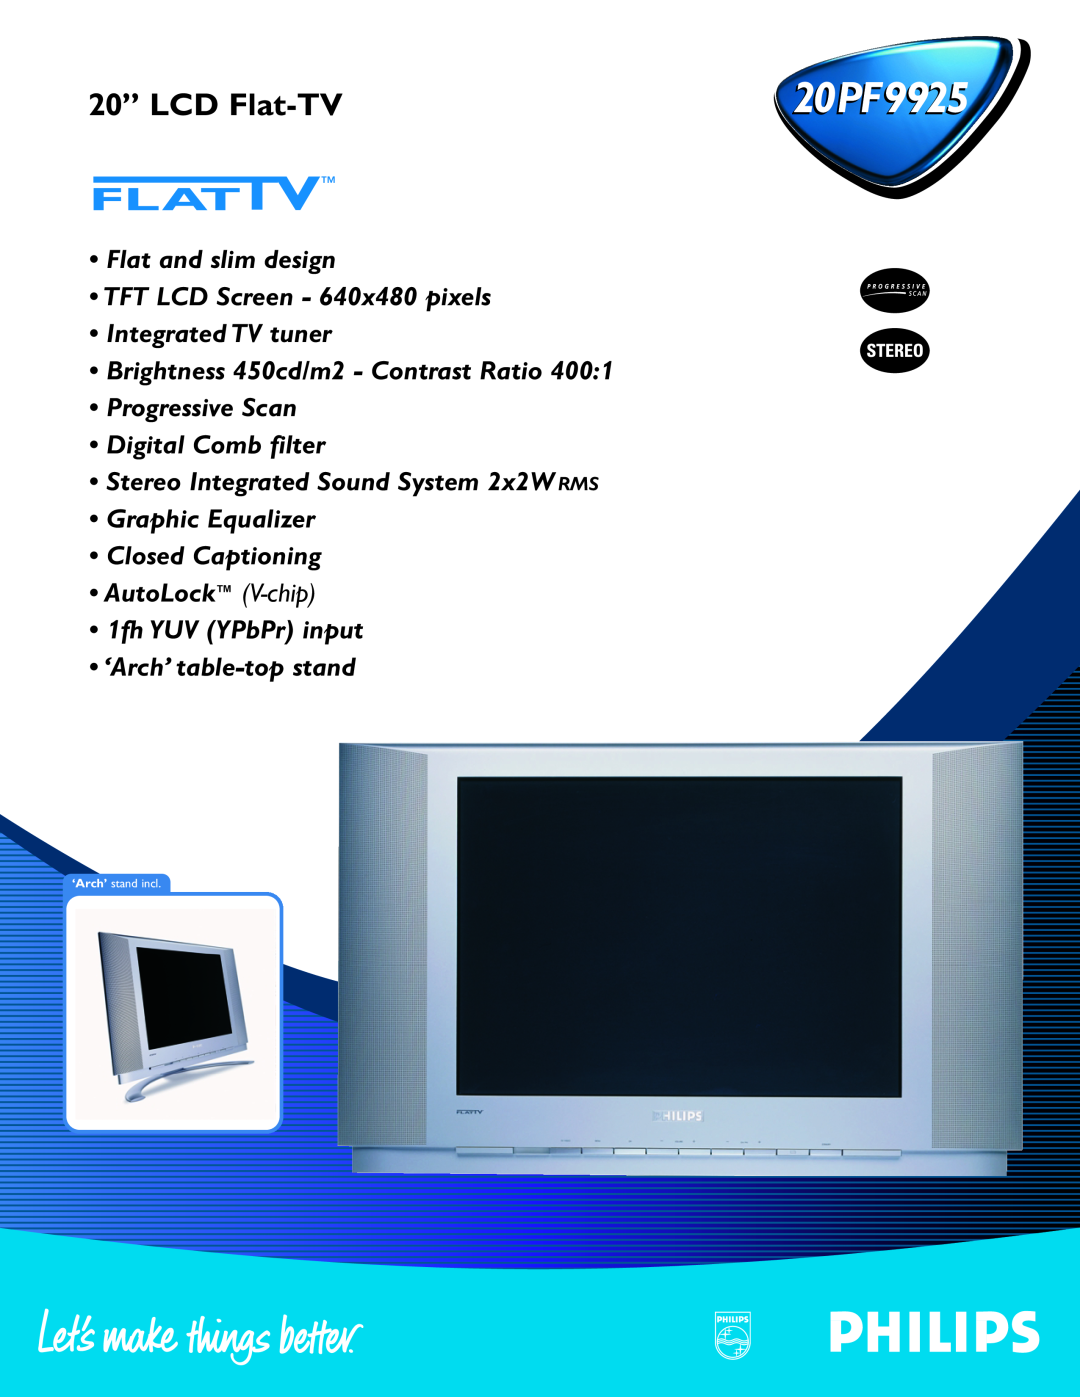 Philips 20PF 9925 manual 20PF9925, 20” LCD Flat-TV, Flat and slim design TFT LCD Screen - 640x480 pixels 